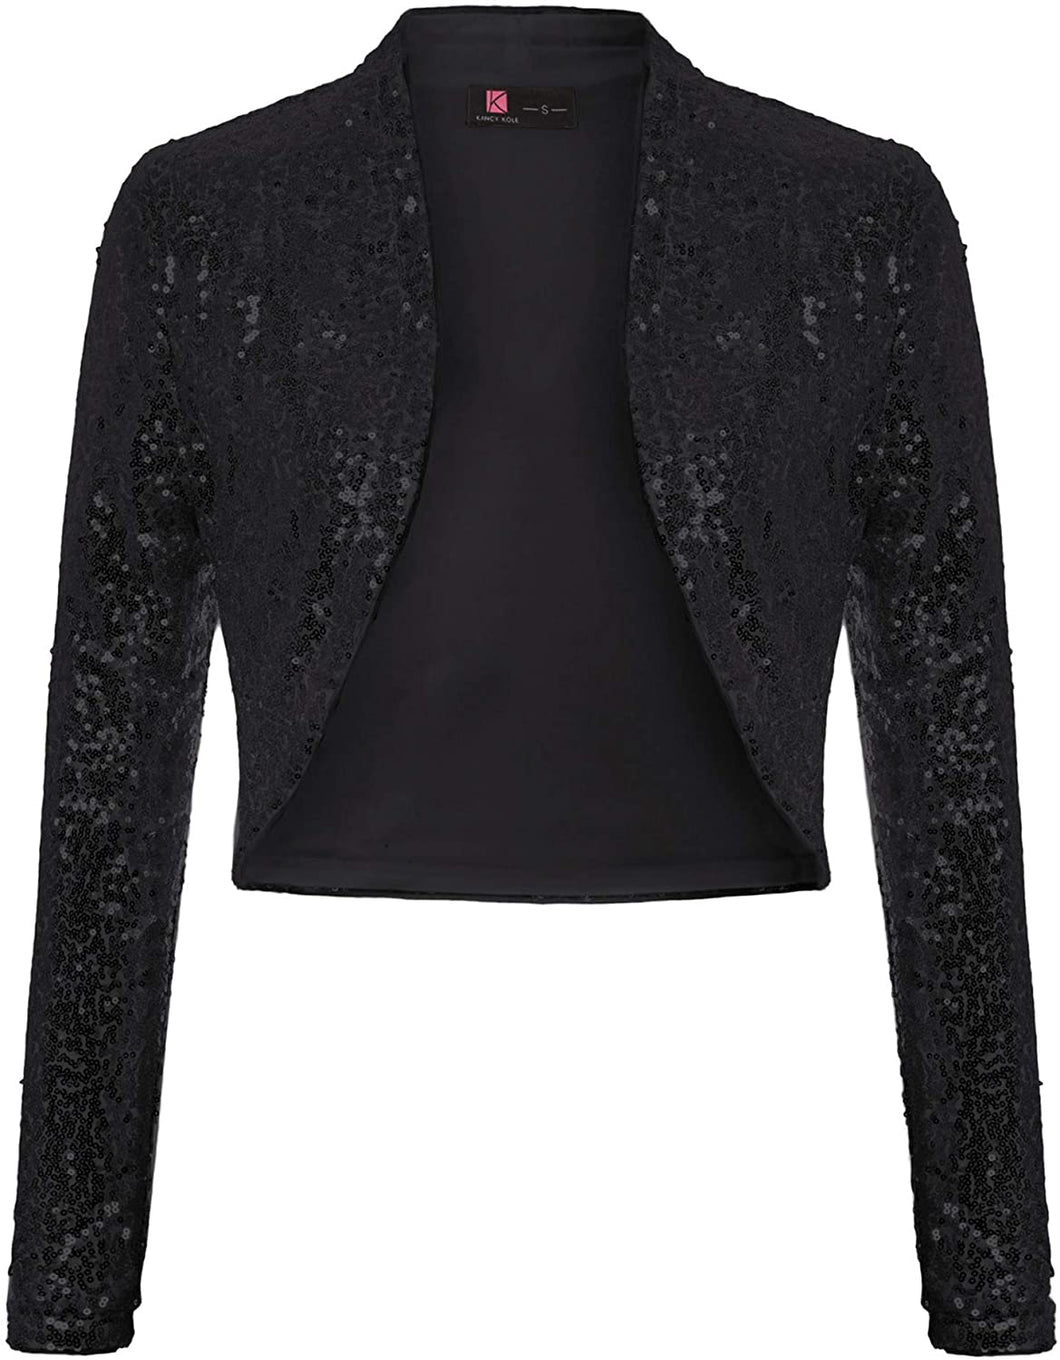 Shiny Black Sequin Shrug Long Sleeve Open Front Blazer Jacket